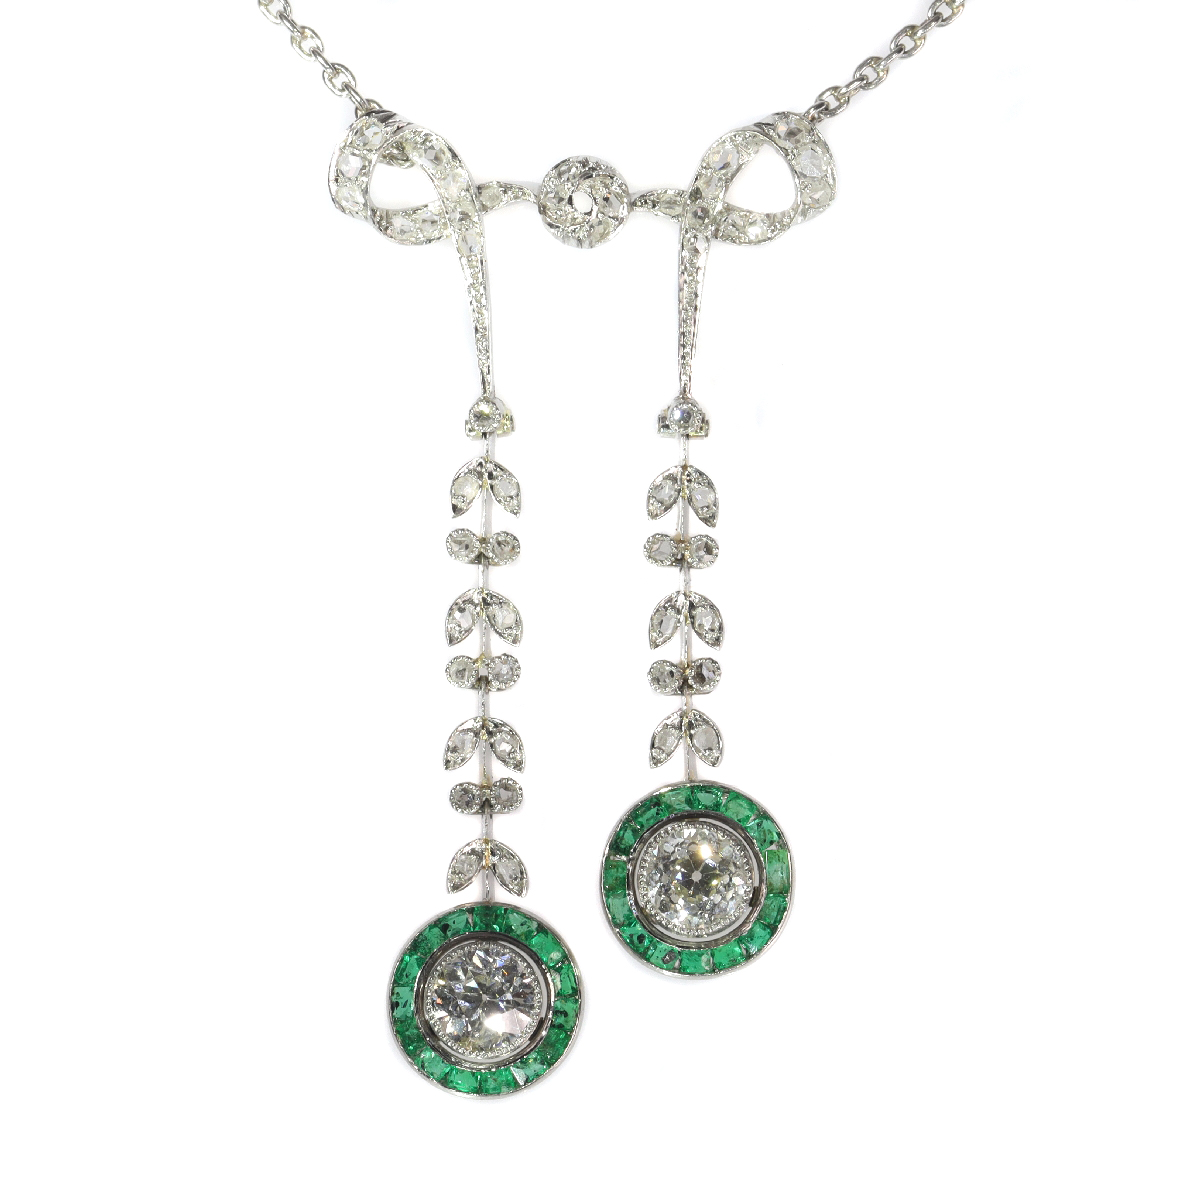 Elegant Belle Epoque diamond and emerald necklace